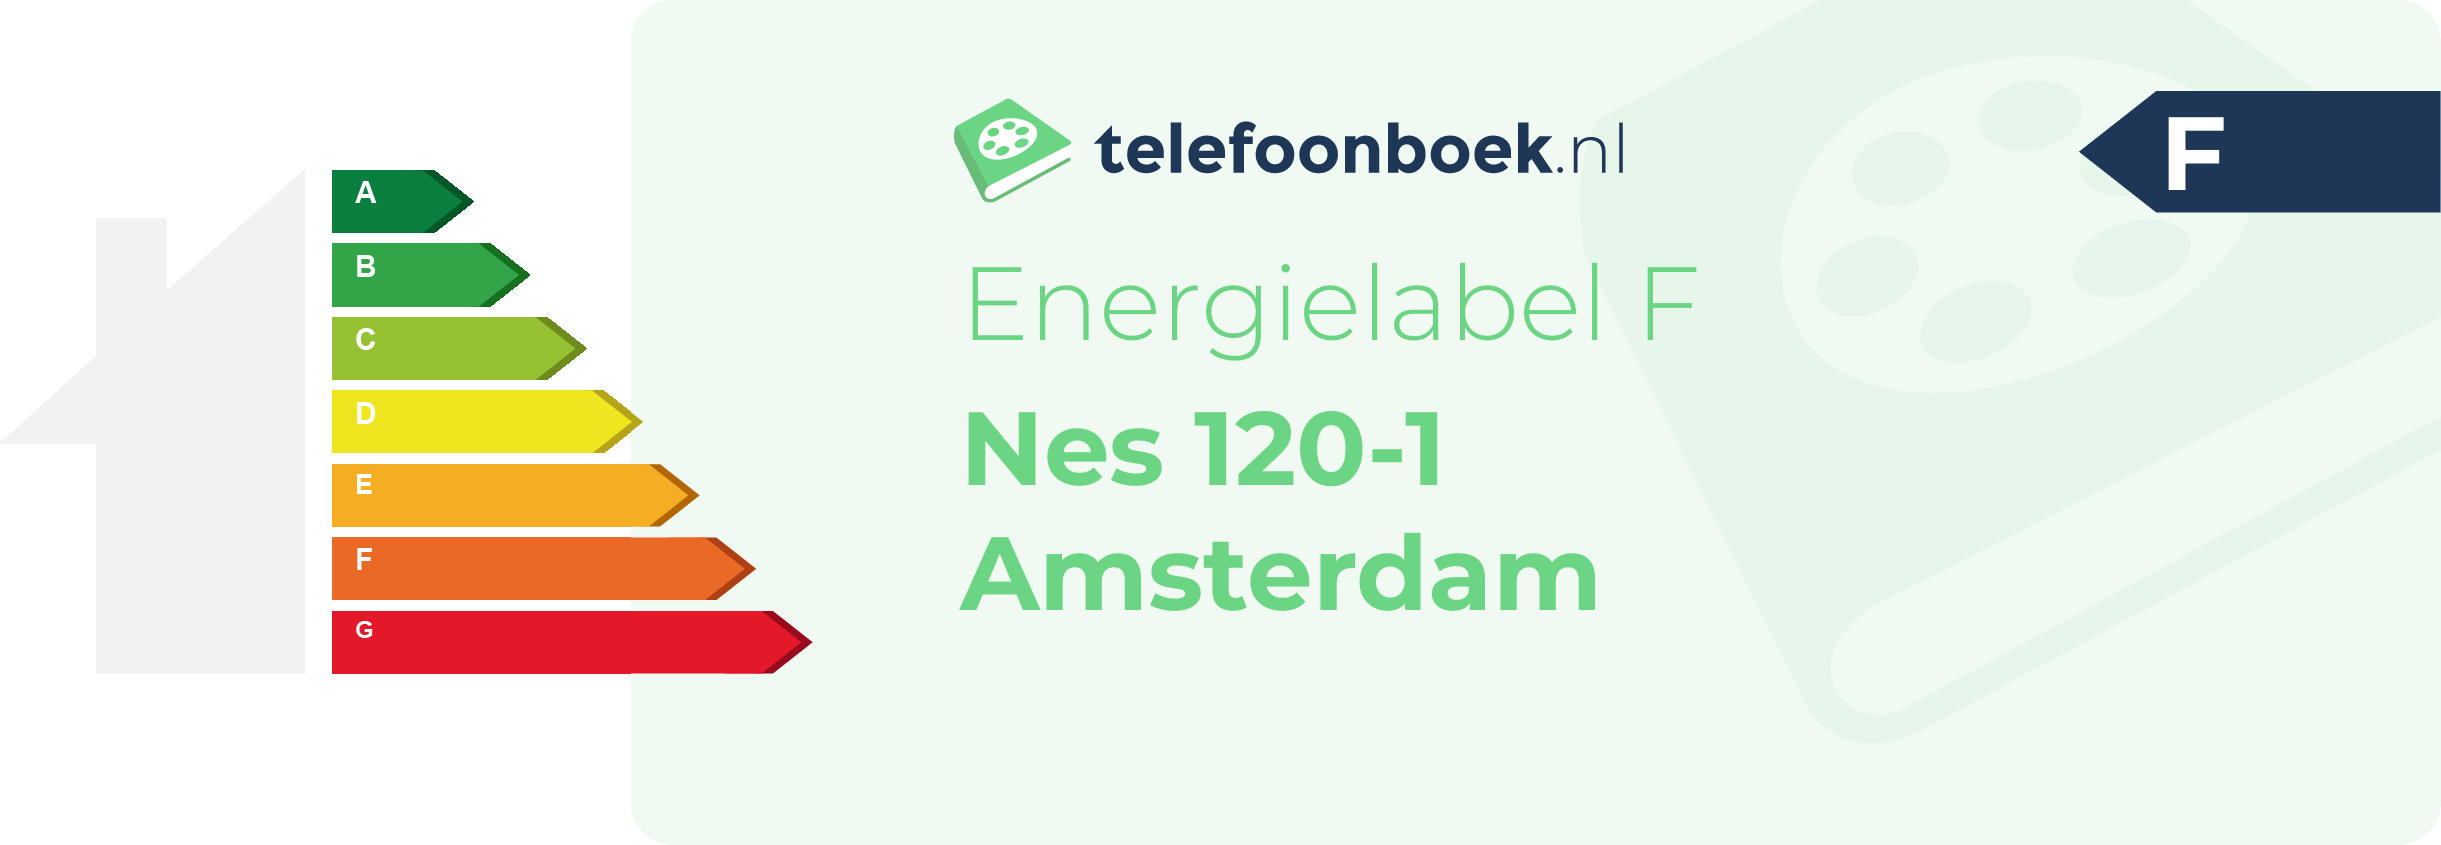 Energielabel Nes 120-1 Amsterdam